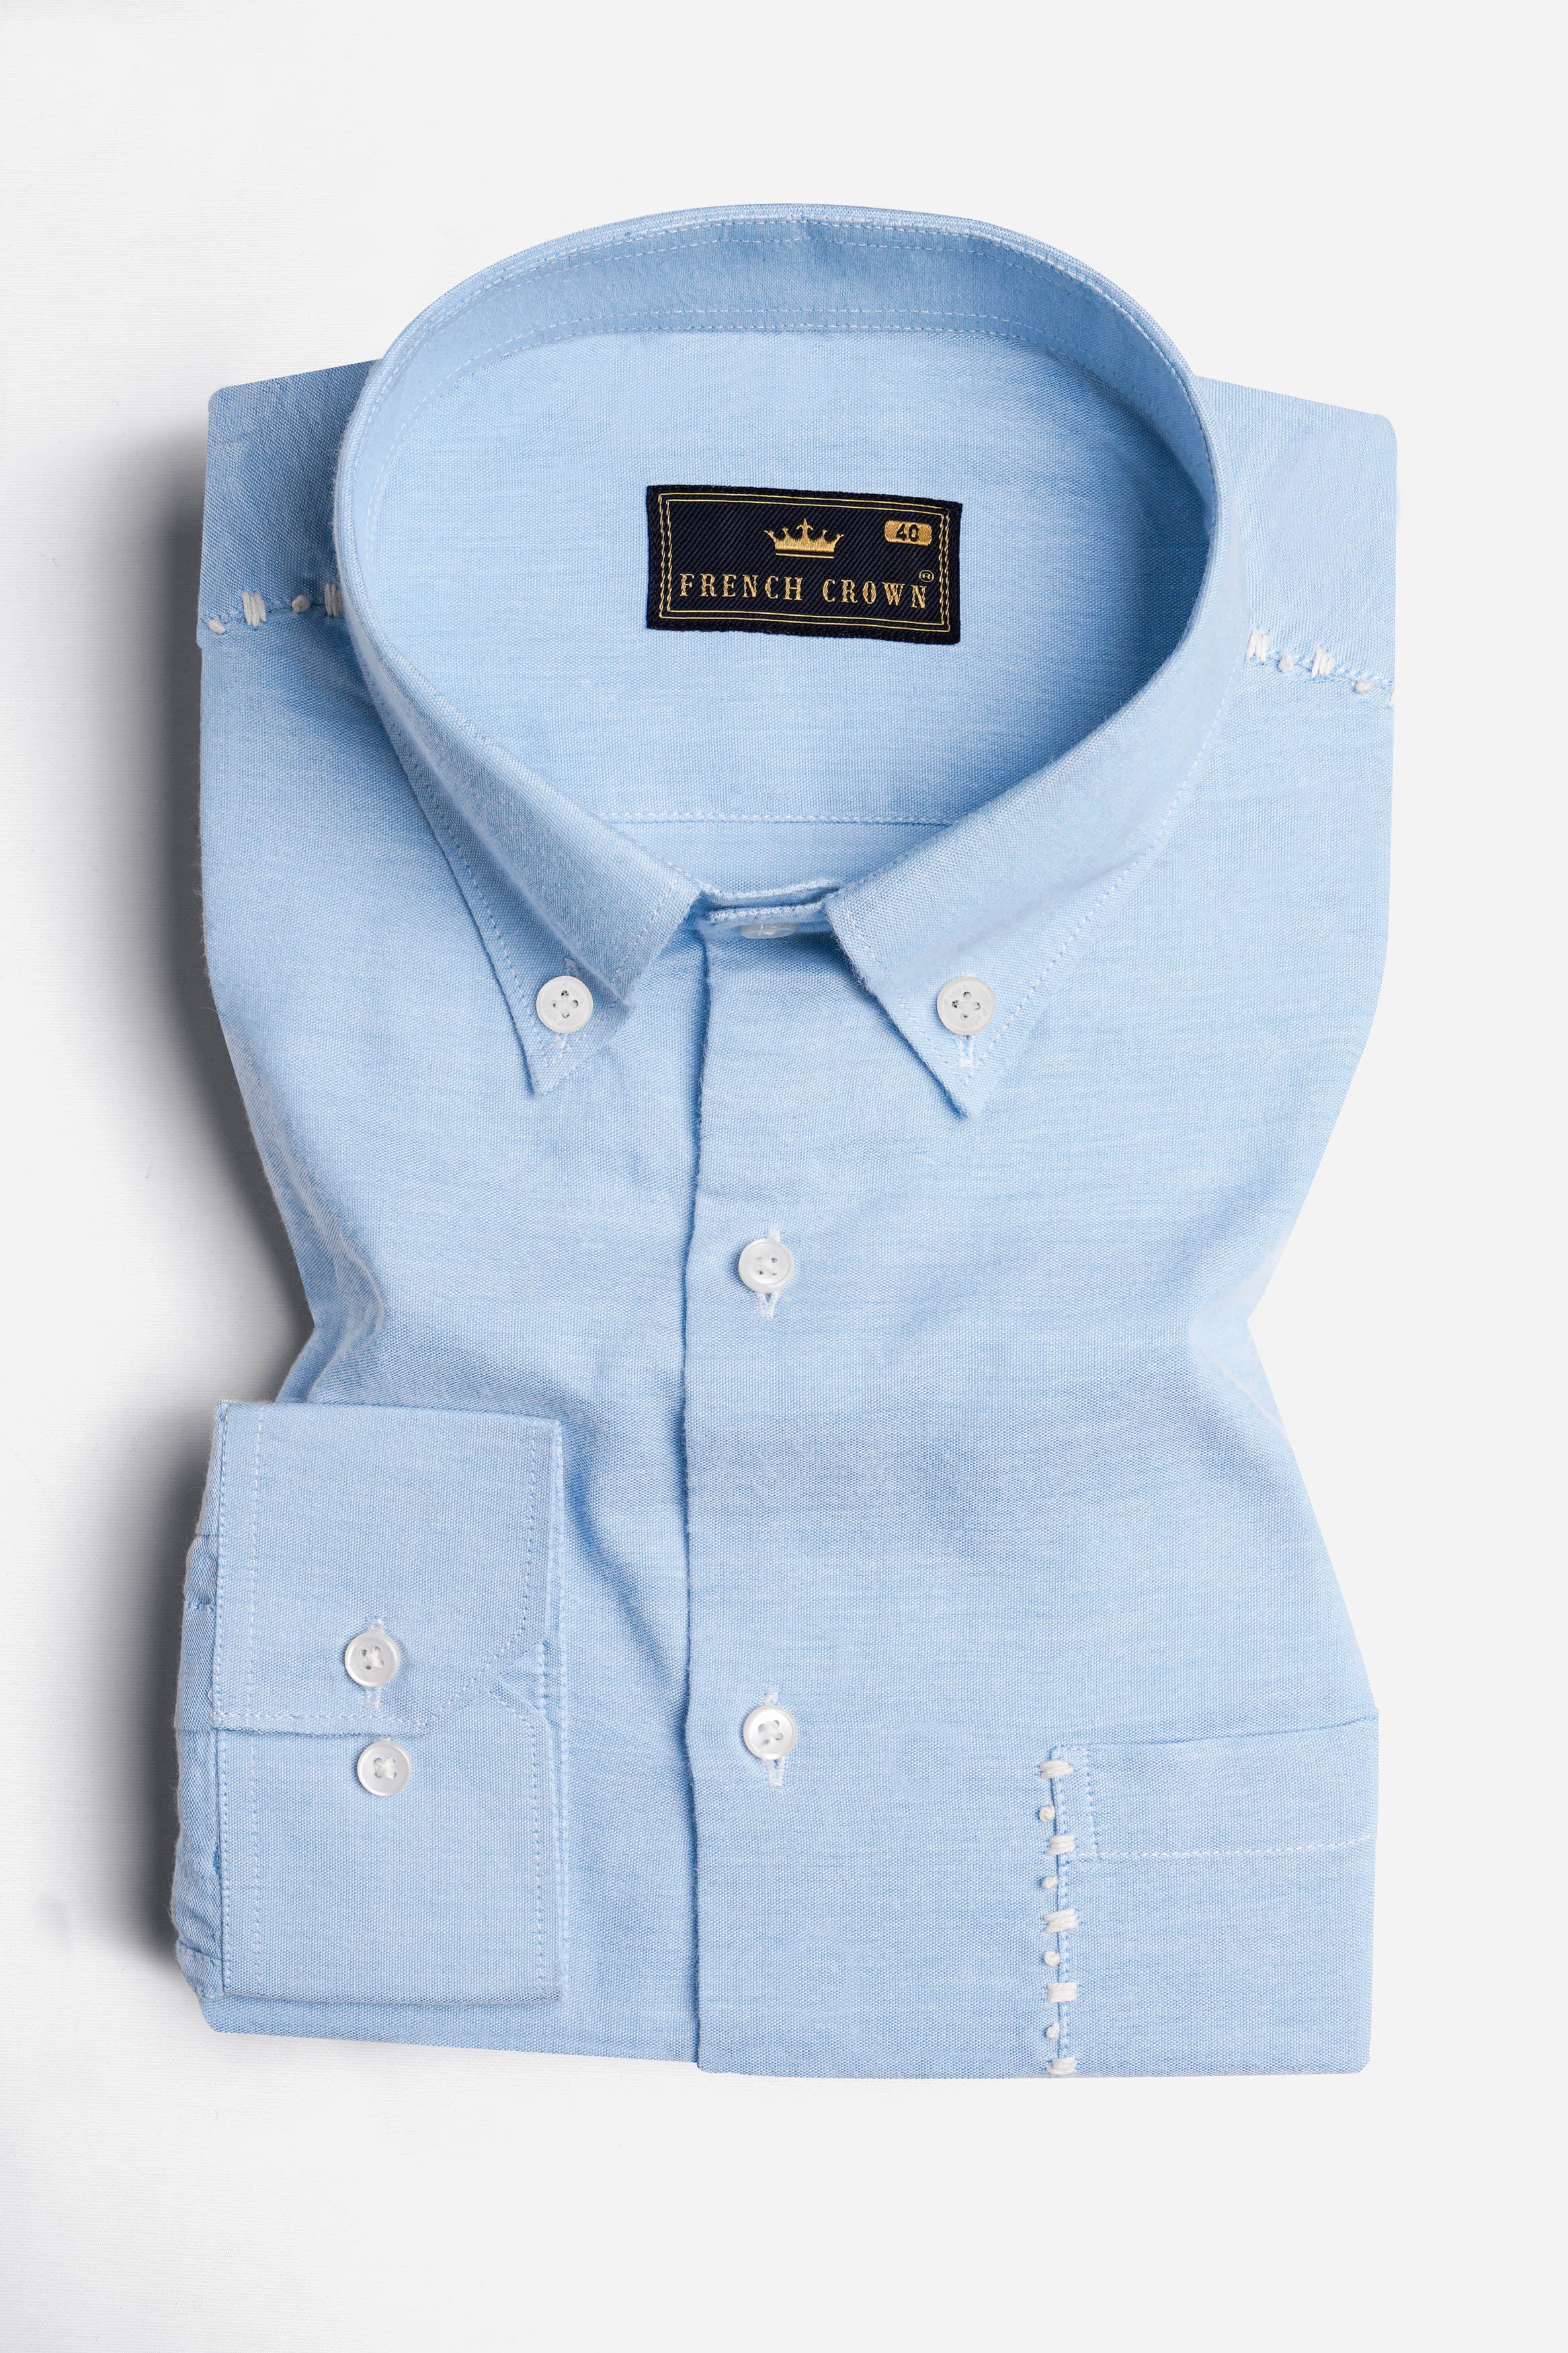 Carolina Blue Hand Stitched Royal Oxford Designer Shirt